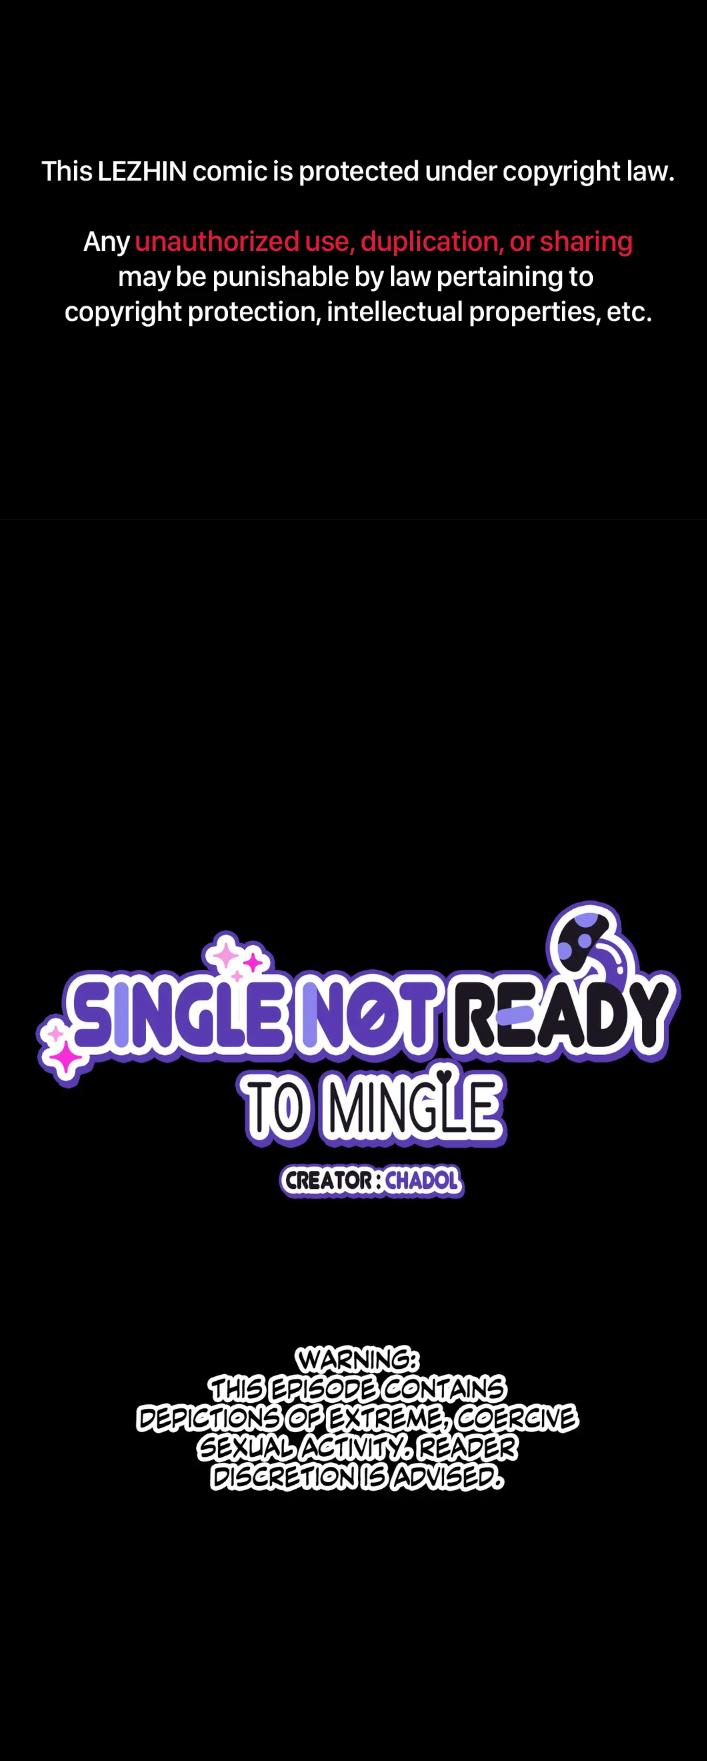 Single Not Ready To Mingle - Page 2